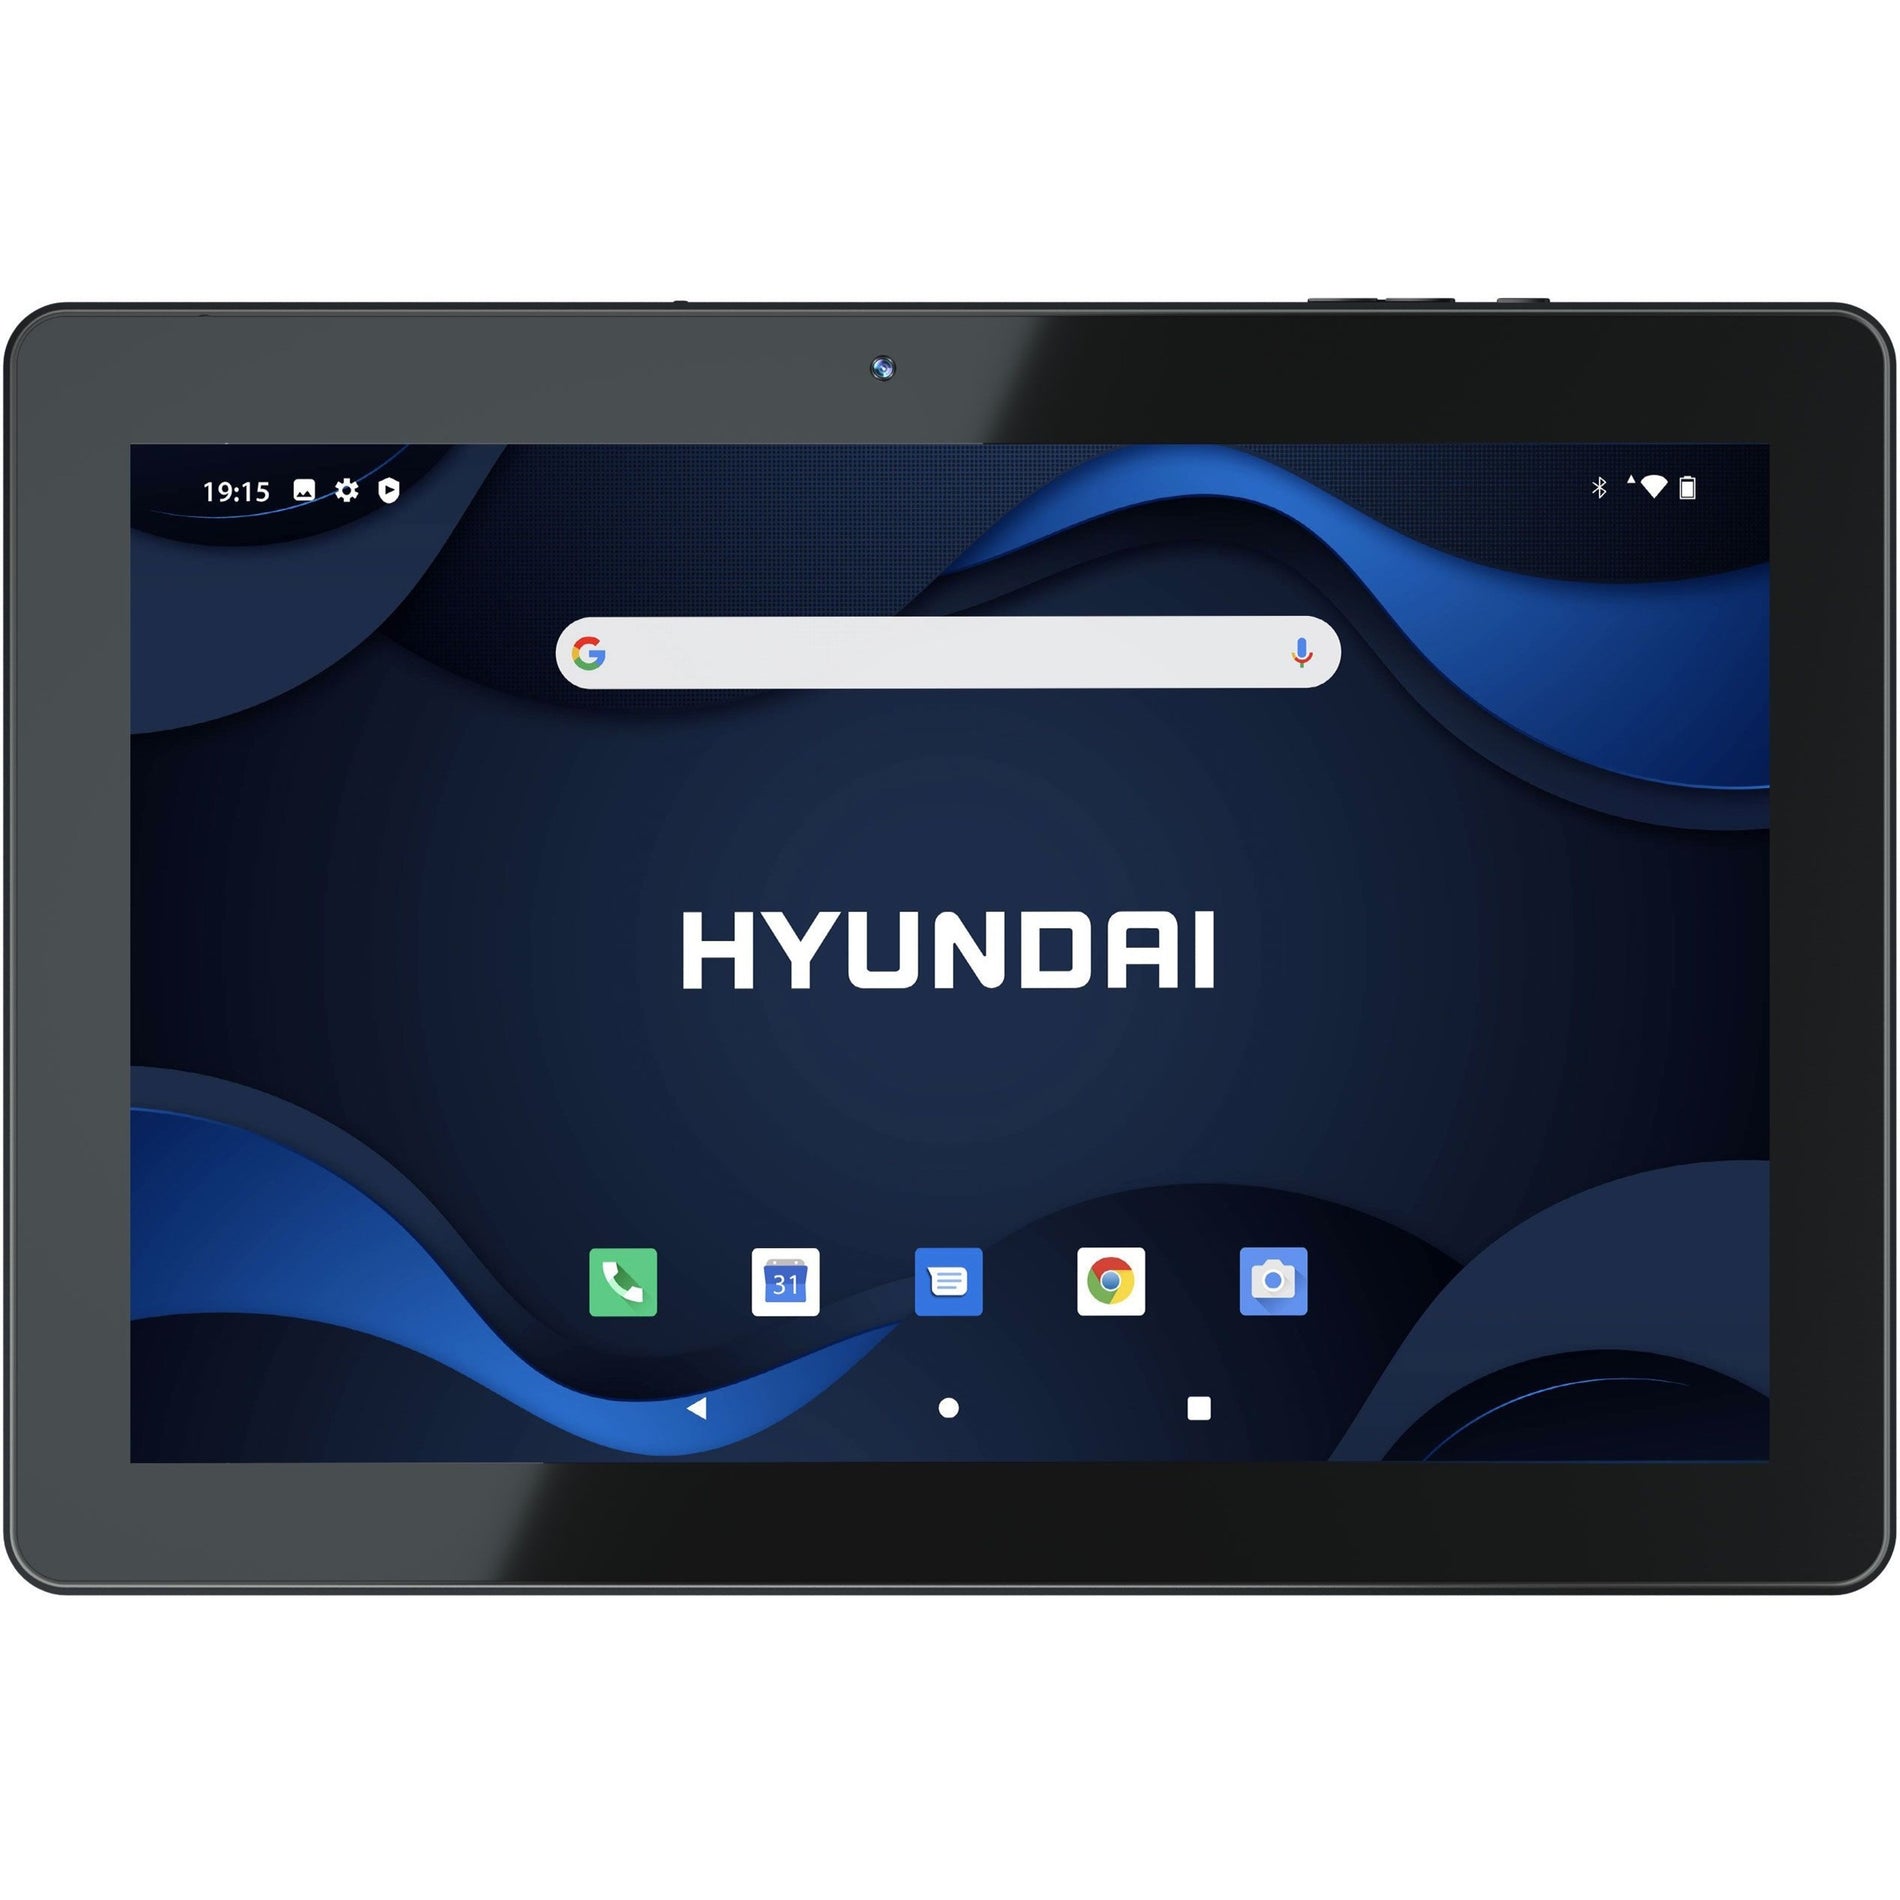 Hyundai HyTab Plus 10LB3 10.1" HD IPS Tablet - Quad-Core Processor, 2GB RAM, 32GB Storage, LTE, Android 11 Go Edition [Discontinued]